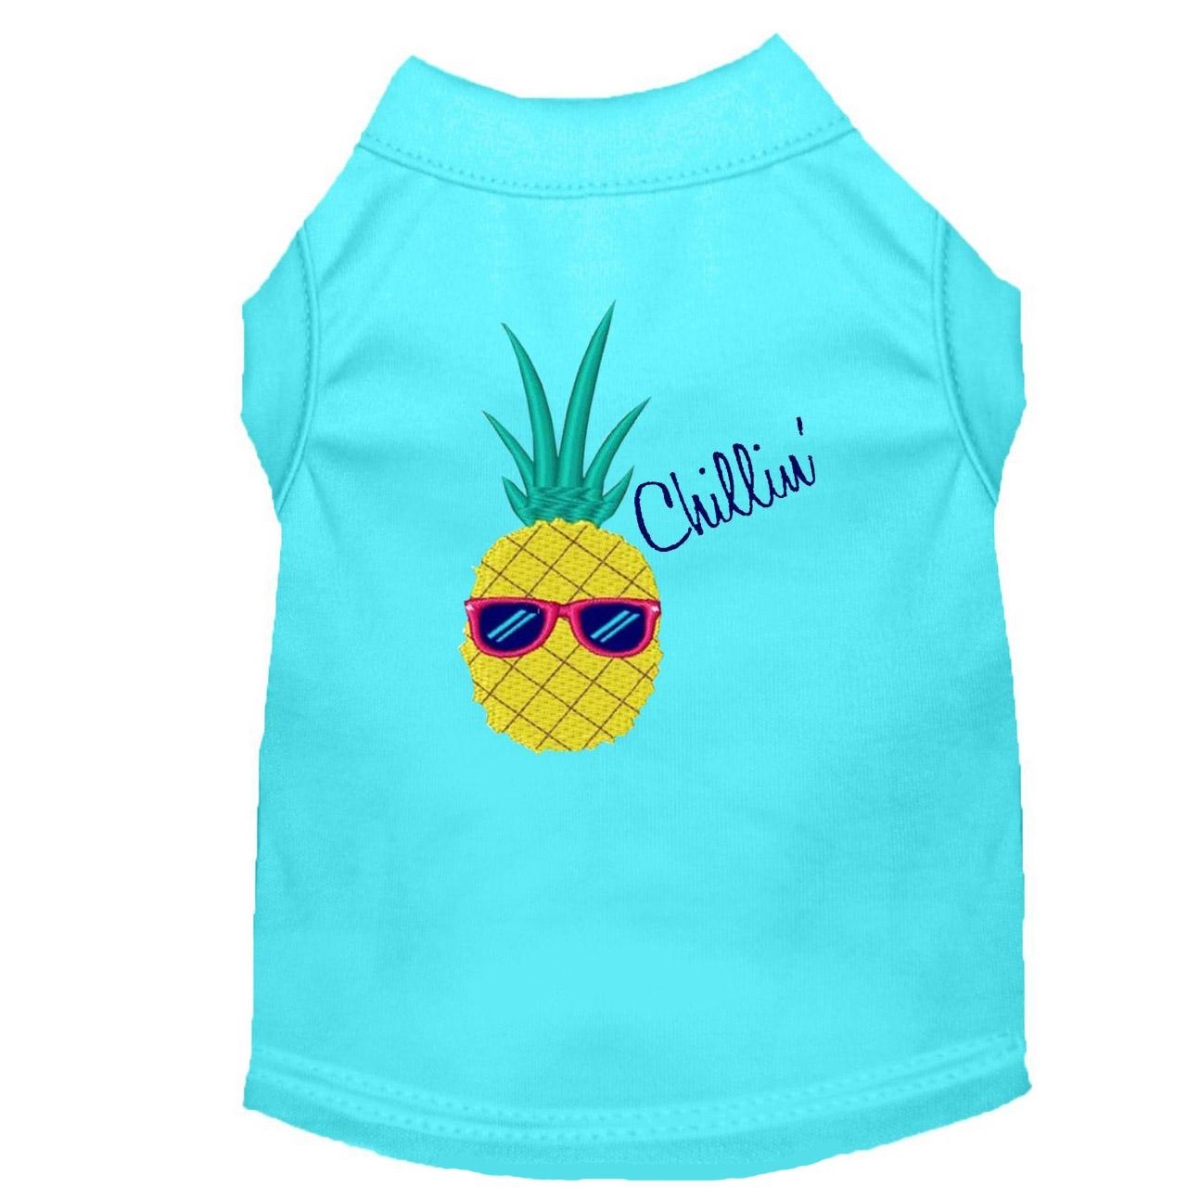 Pineapple Chillin Embroidered Dog Shirt, Aqua - Small